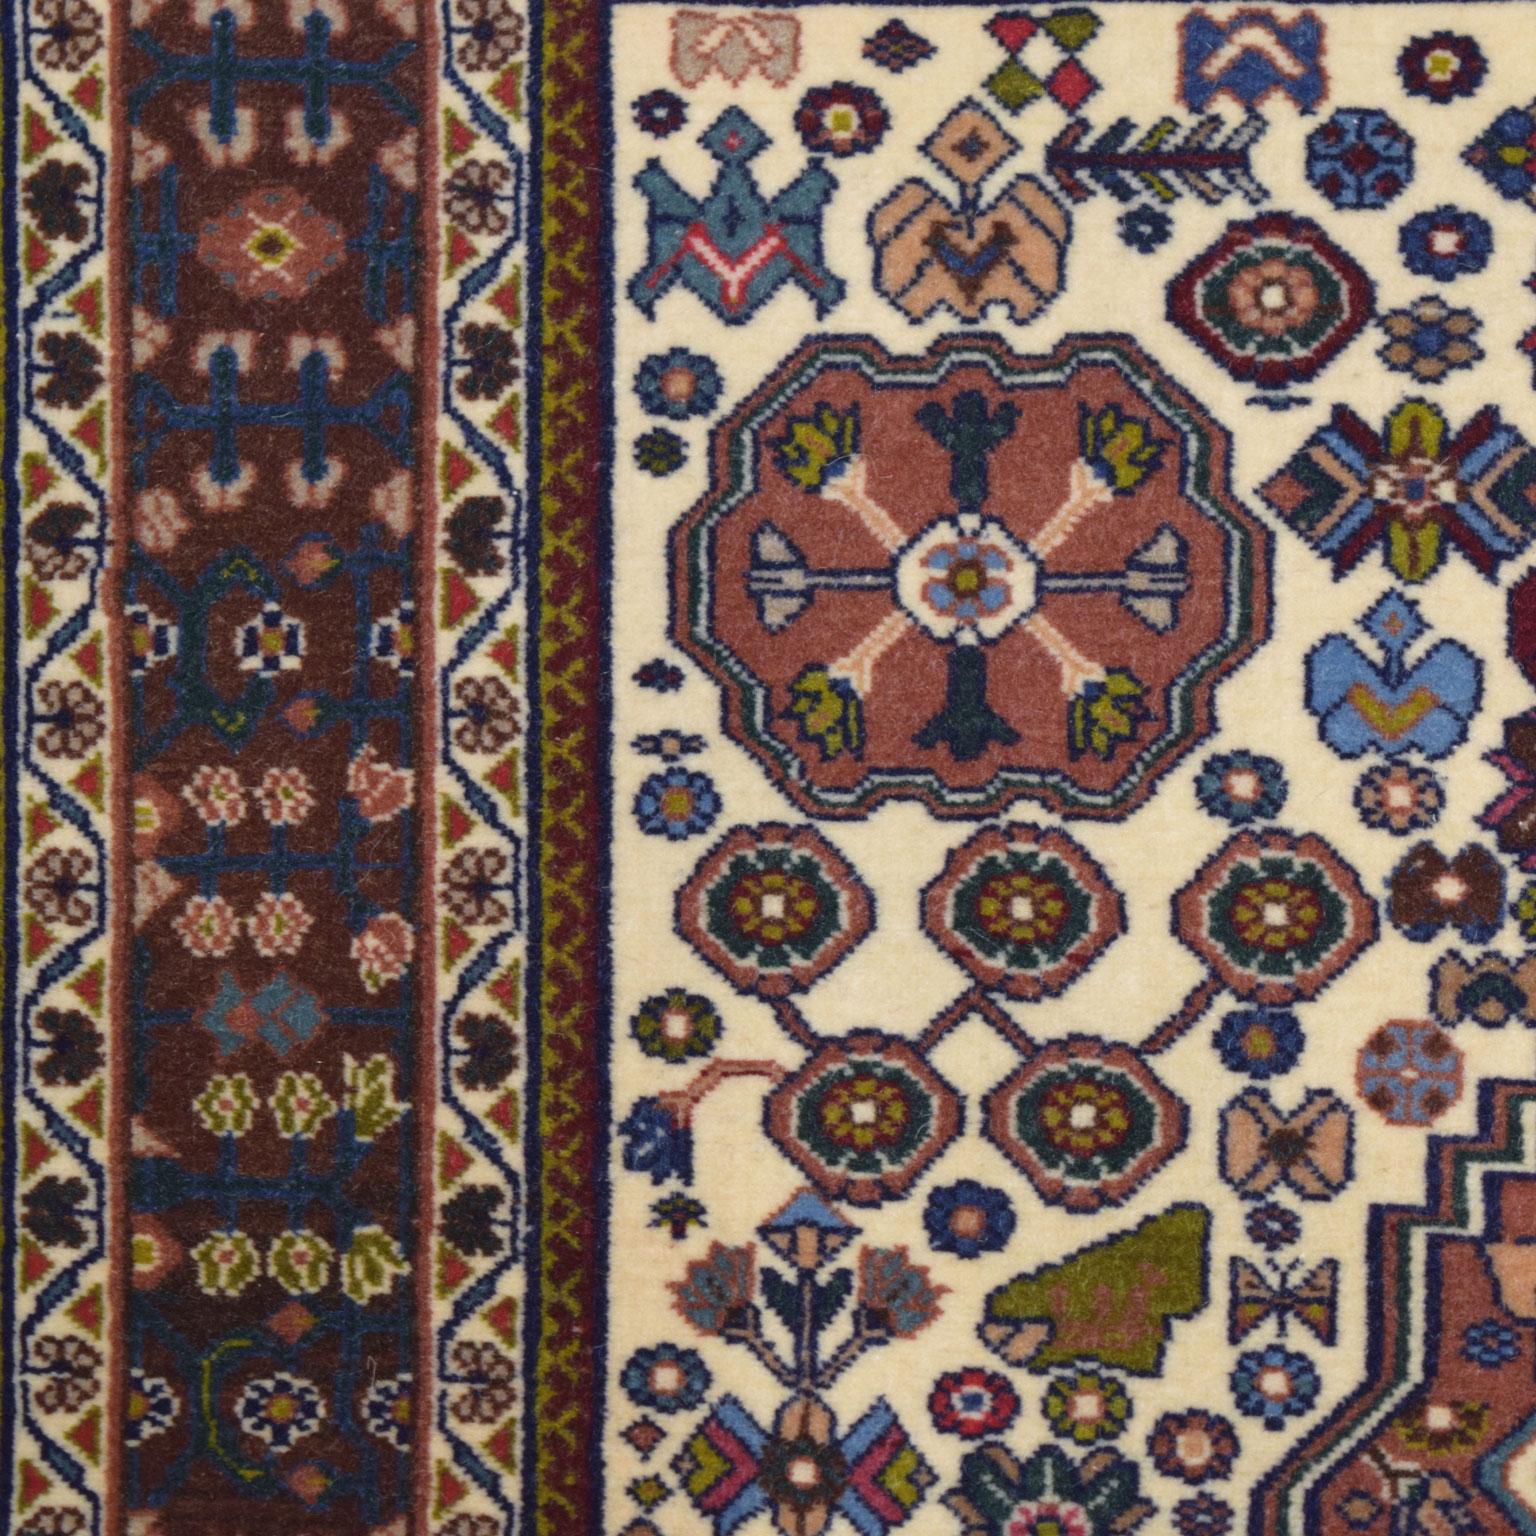 Wool Persian Kashkouli Tribal Rug, Blue, Cream and Purple, 3' x 5'